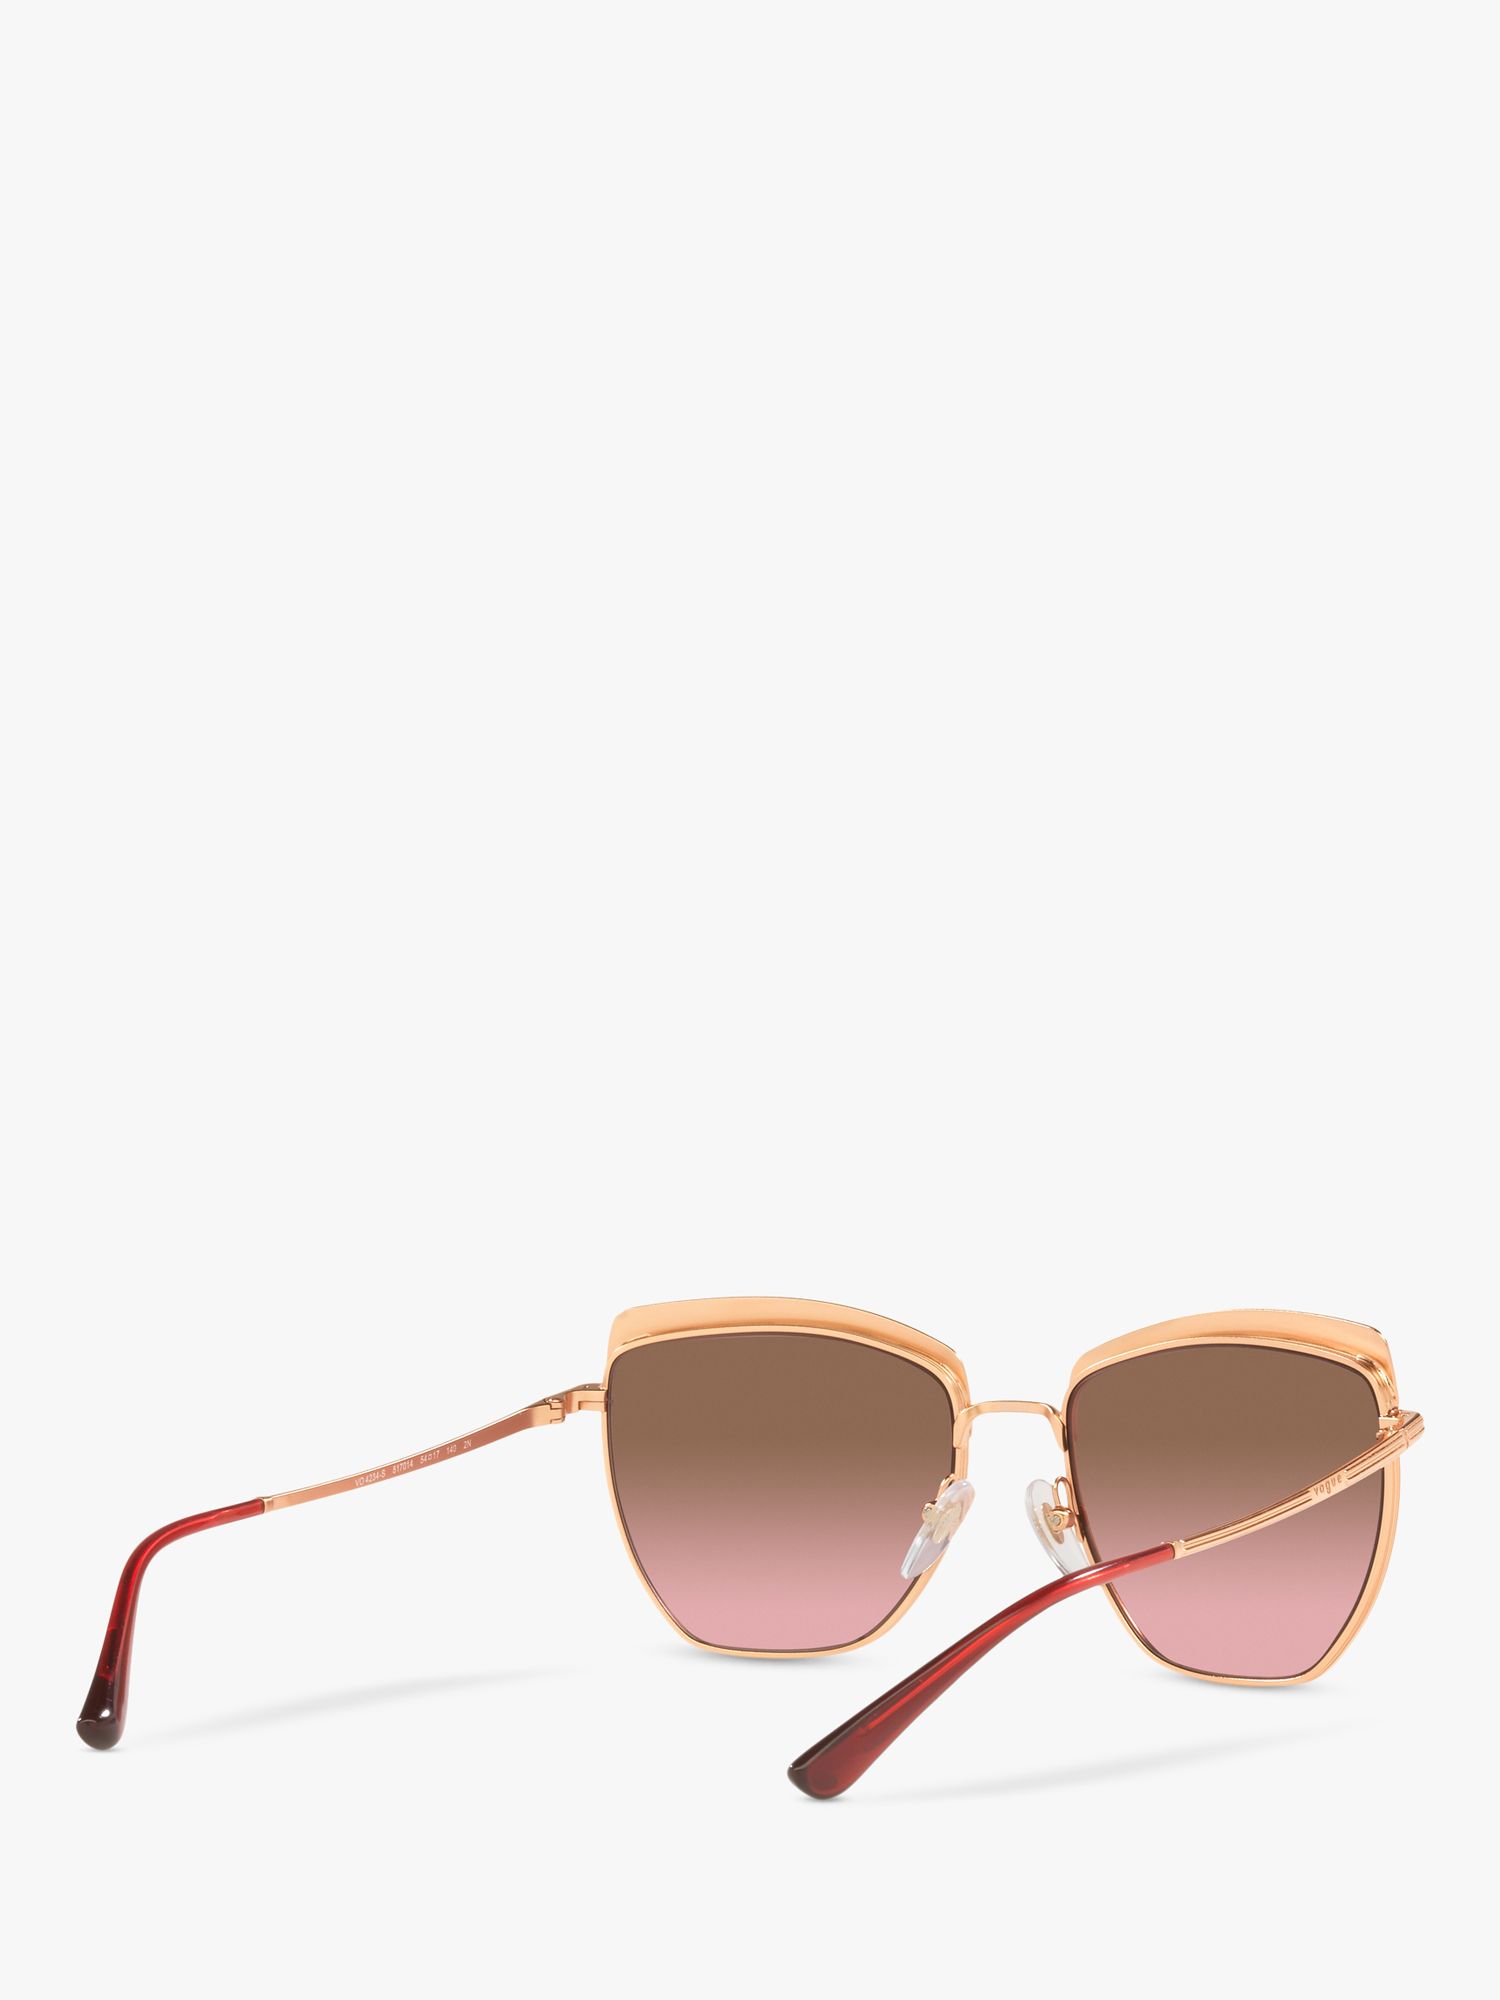 Buy Vogue VO4234S Women's Irregular Sunglasses, Rose Gold/Pink Gradient Online at johnlewis.com